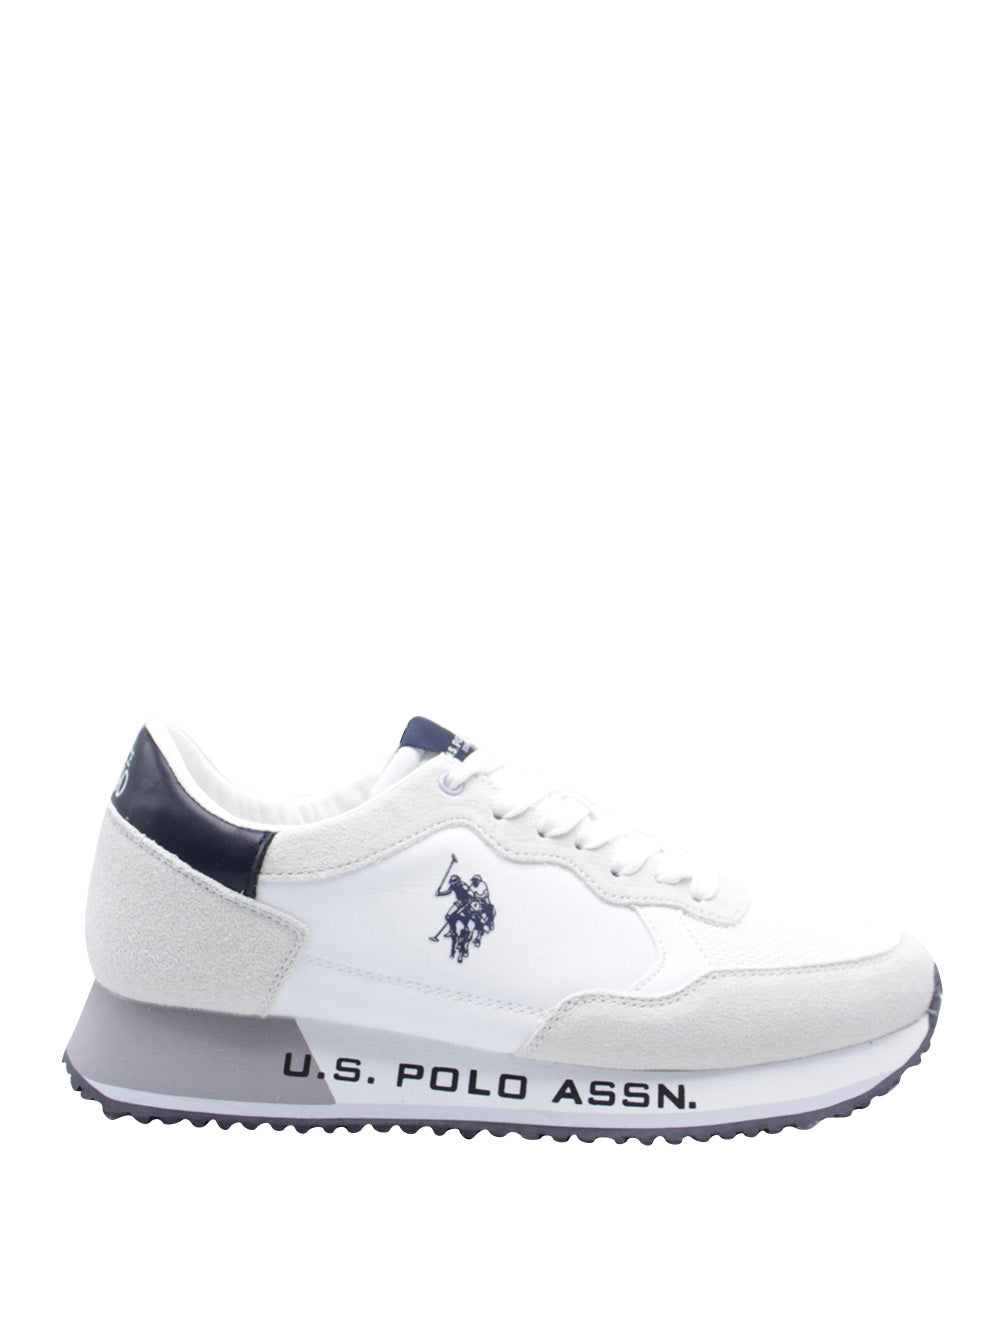 U.S. POLO ASSN. Sneakers Uomo - Bianco modello CLEEF006